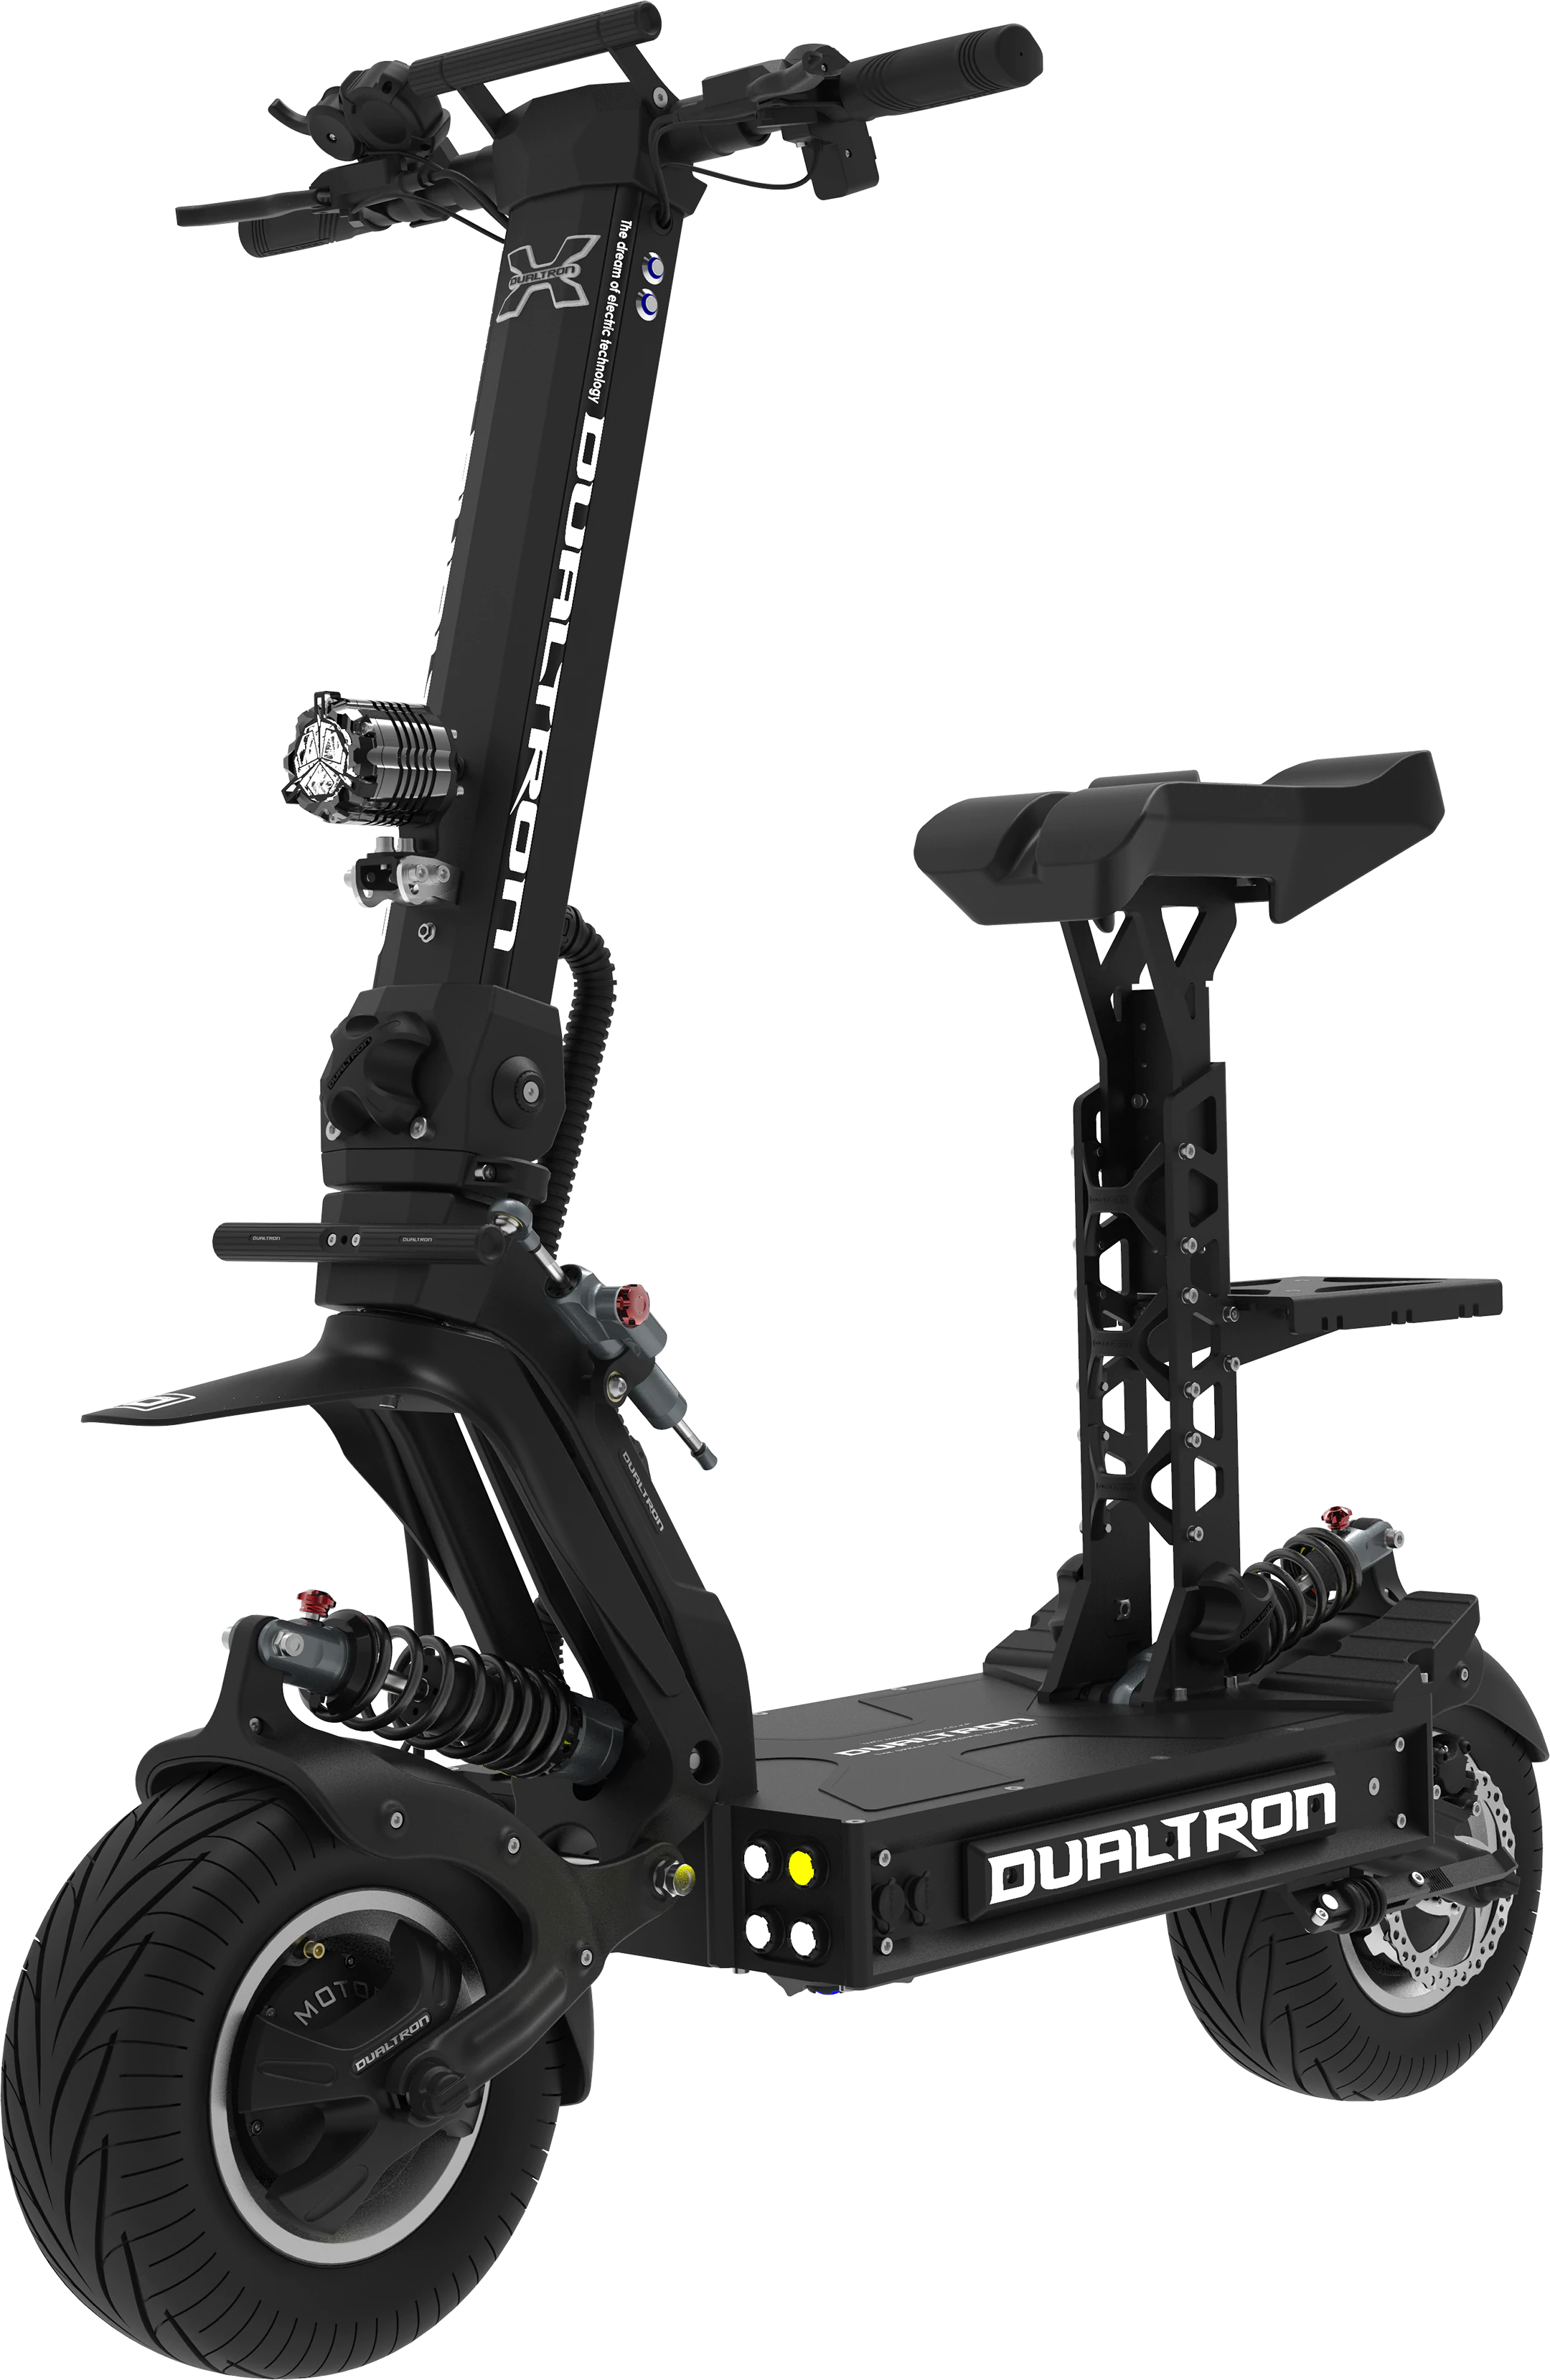 minimotors Dualtron x2 вид спереди с седлом